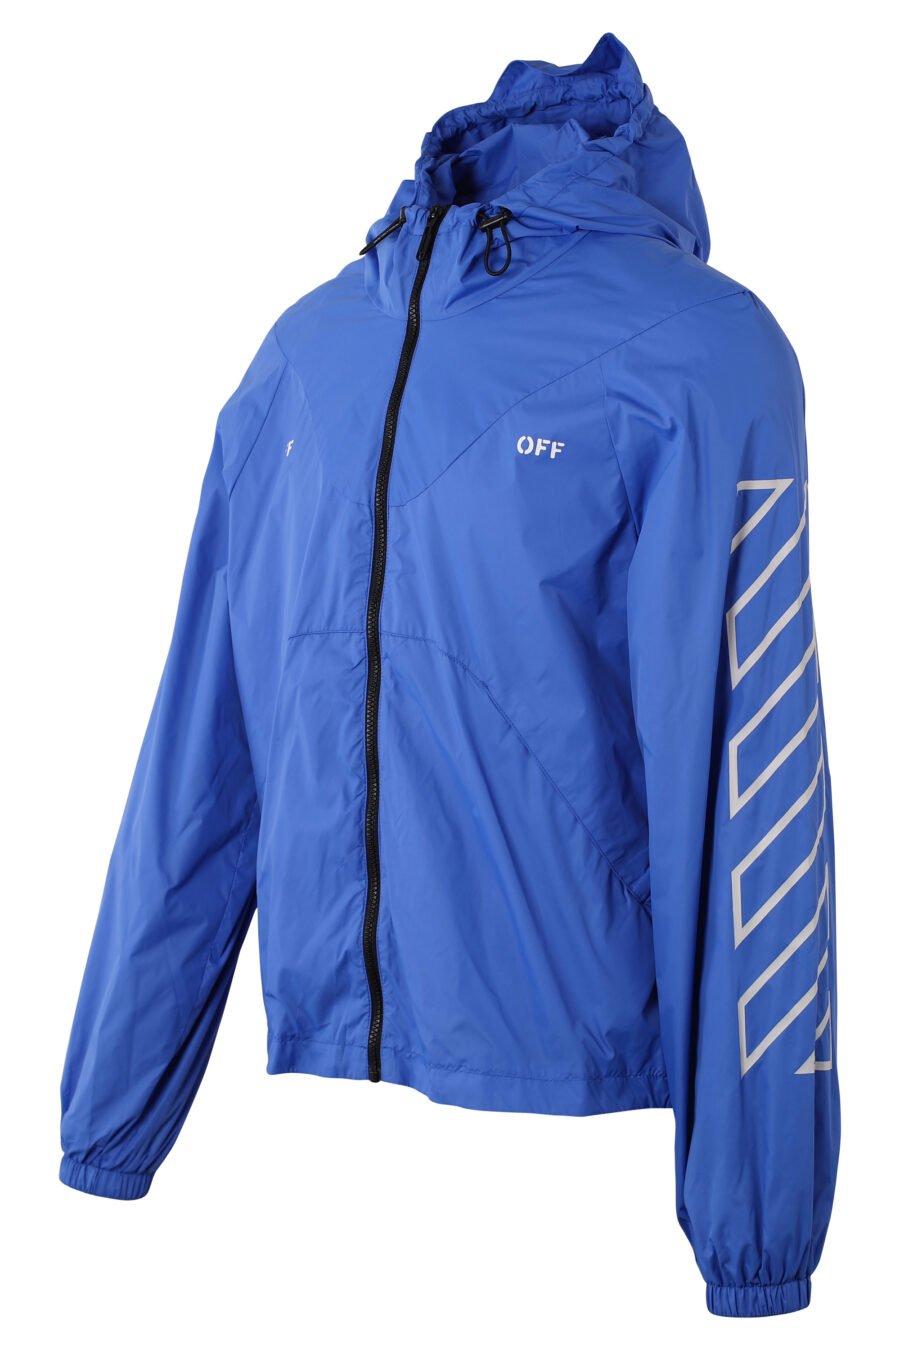 Blaue Jacke mit weißem "Diagonals"-Logo - IMG 1560